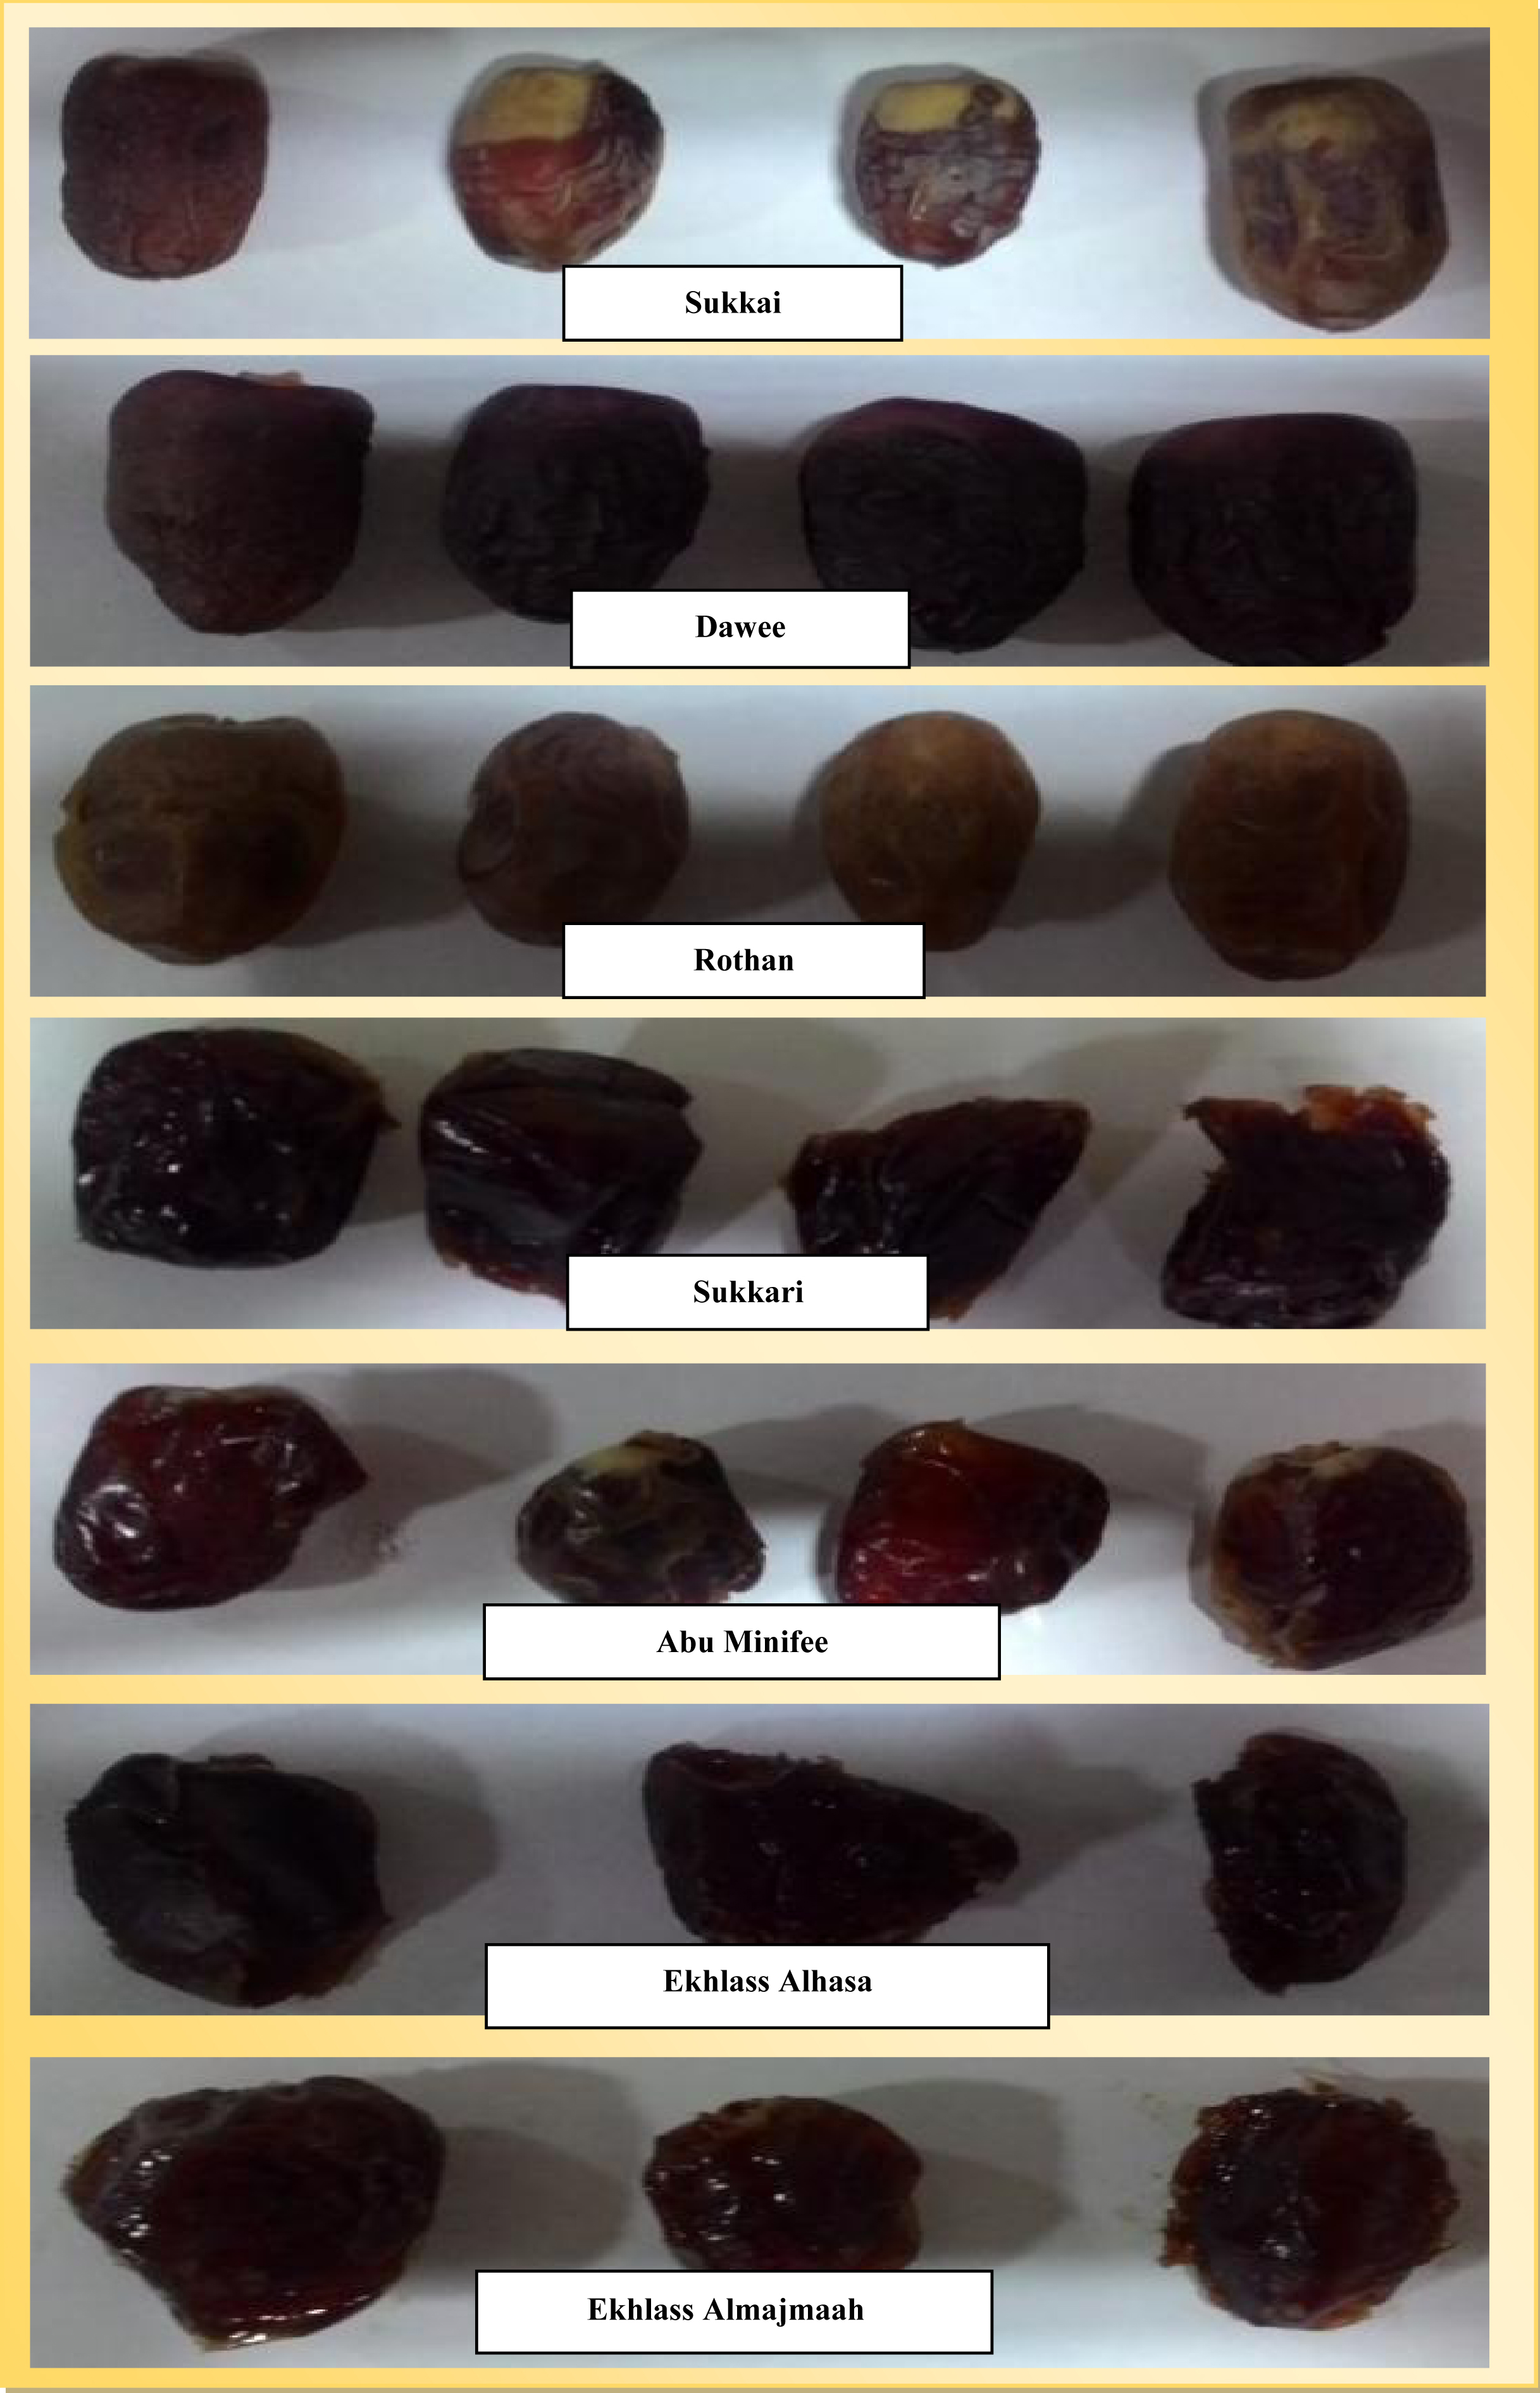 Morphological appearance of different cultivars of Saudi Arabian date fruits.